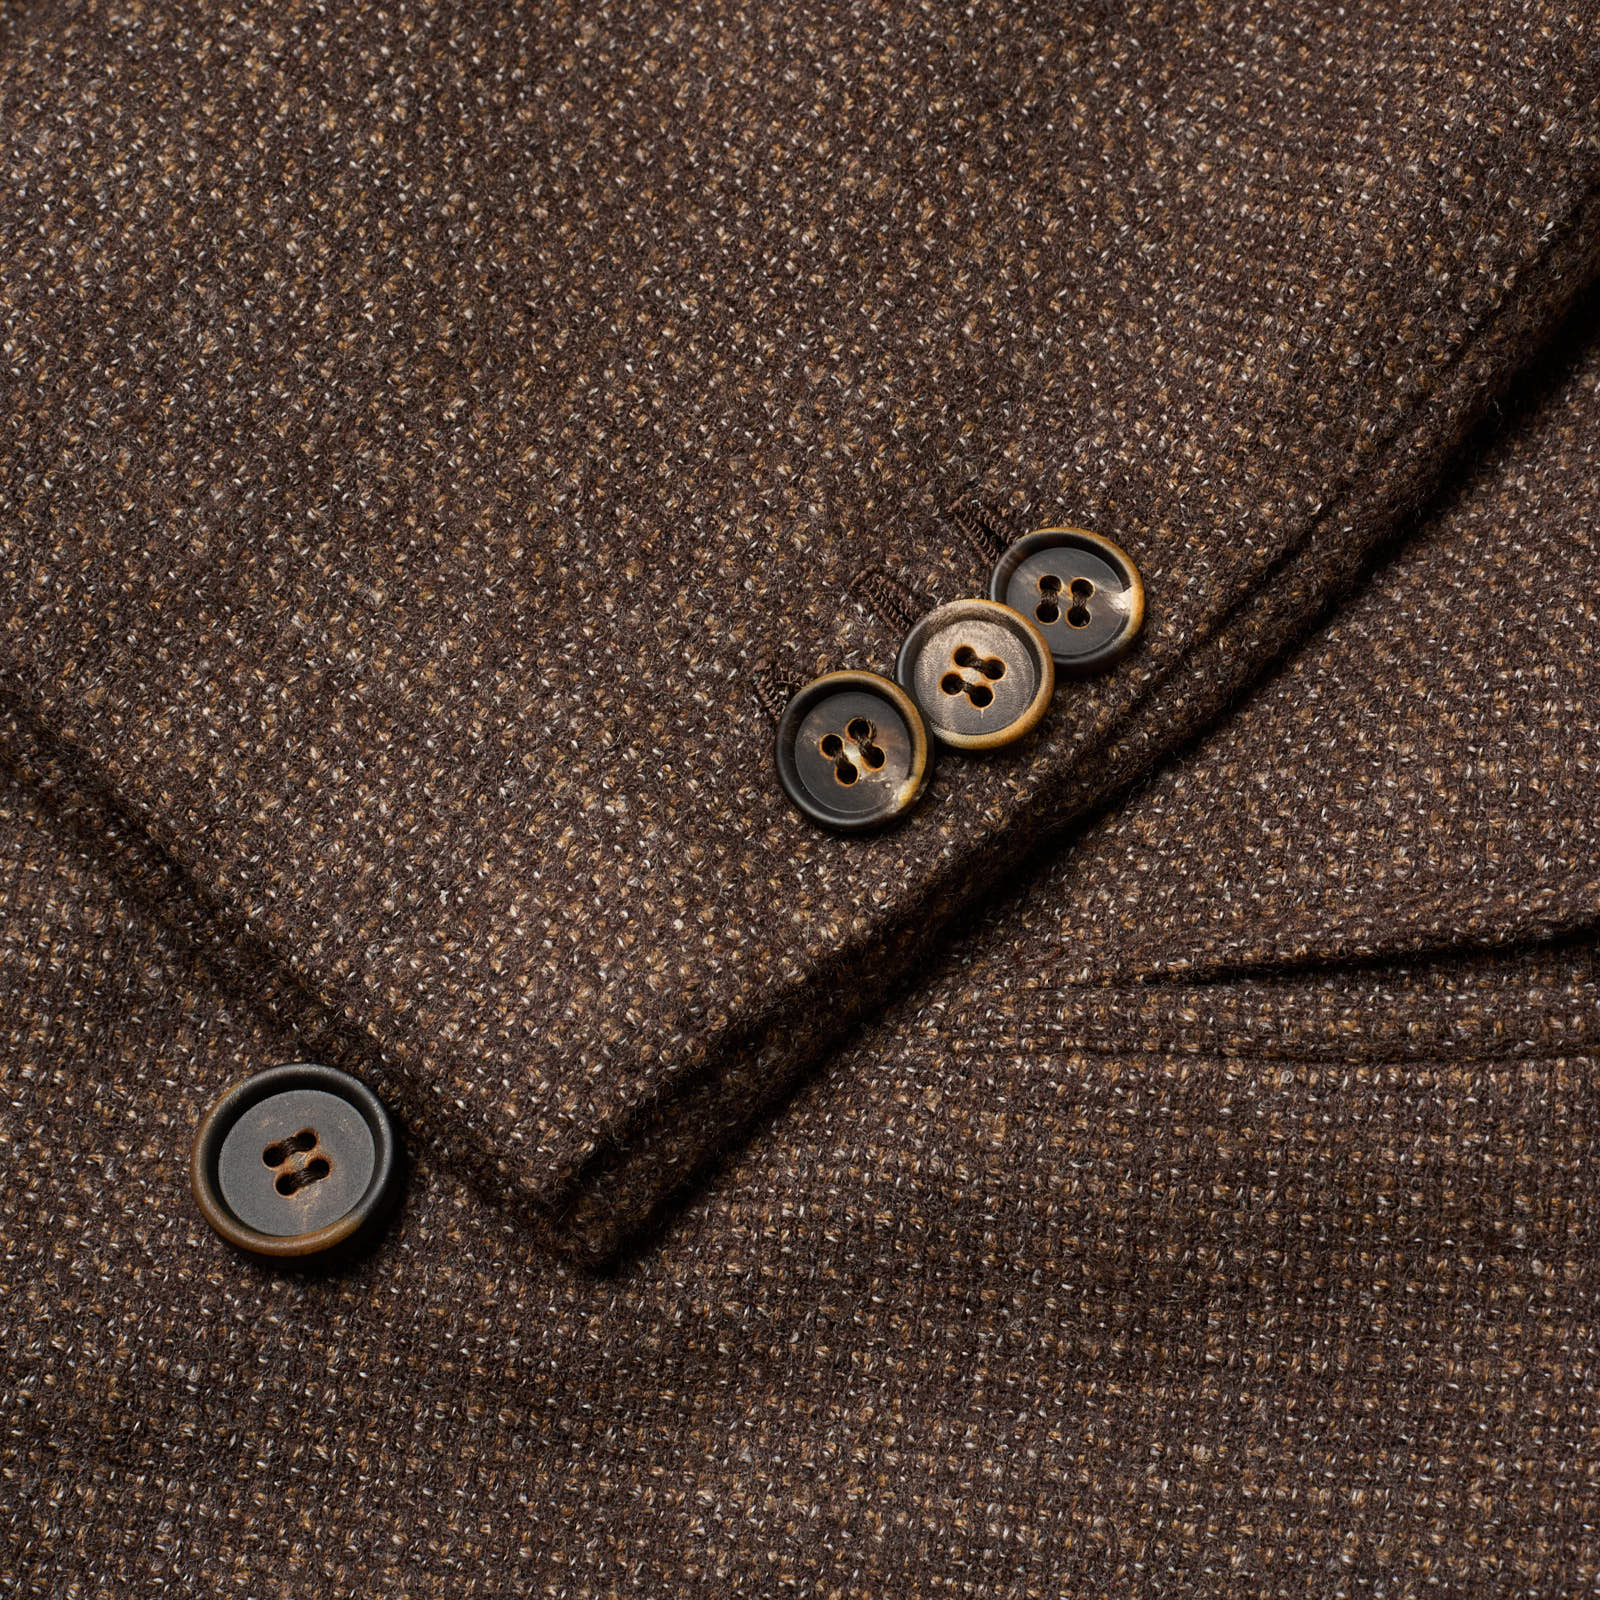 SARTORIA CHIAIA Handmade Bespoke Brown Loro Piana Cashmere Suit EU 54 NEW US 44